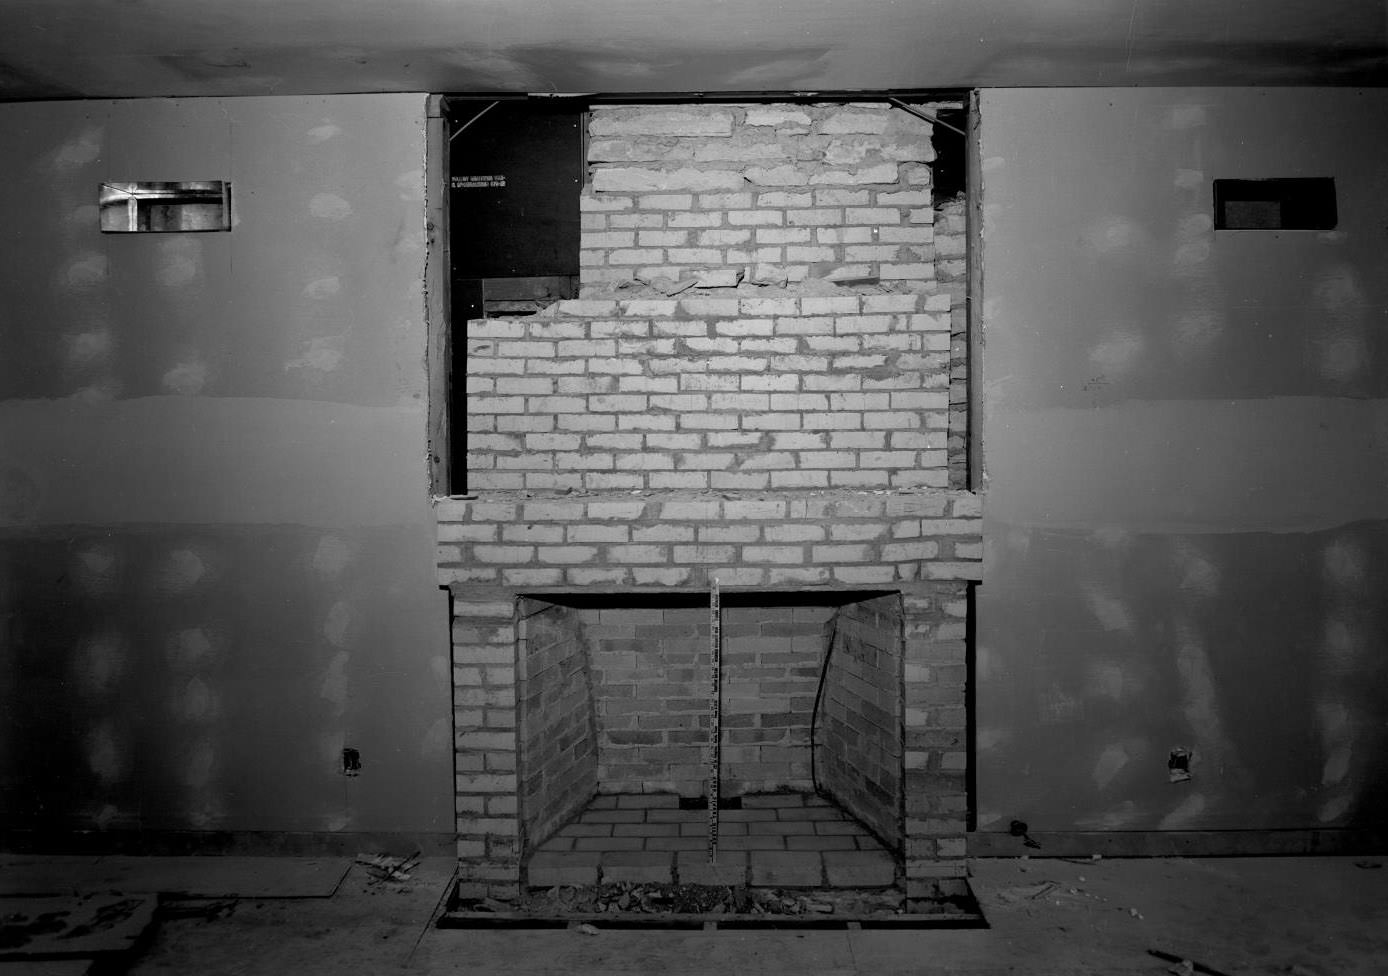 Fireplace Installation at 2413 Pemberton Place, 1955.